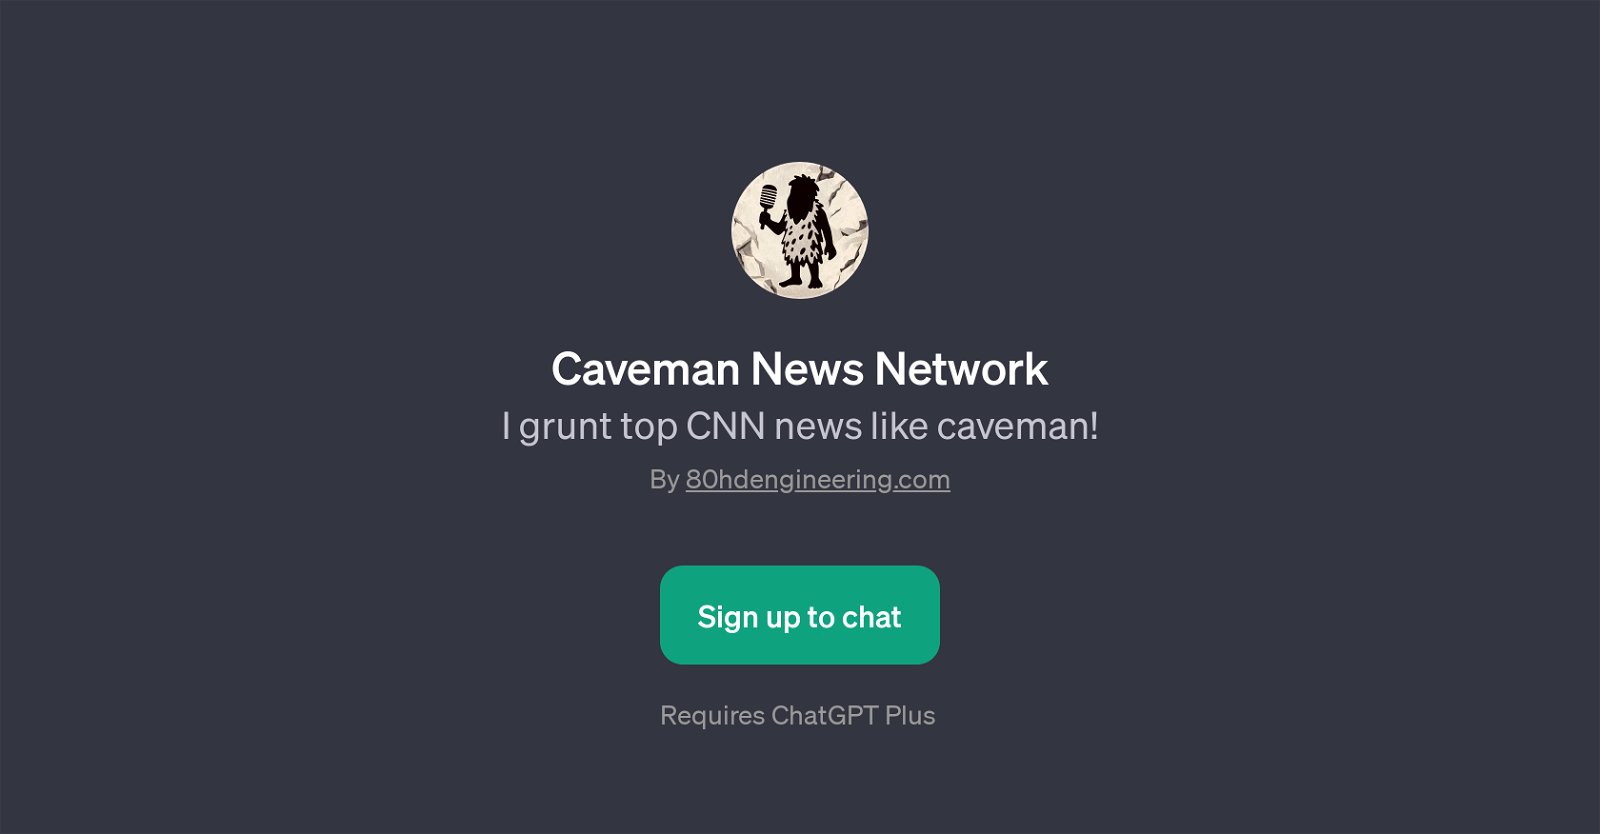 Caveman News Network website